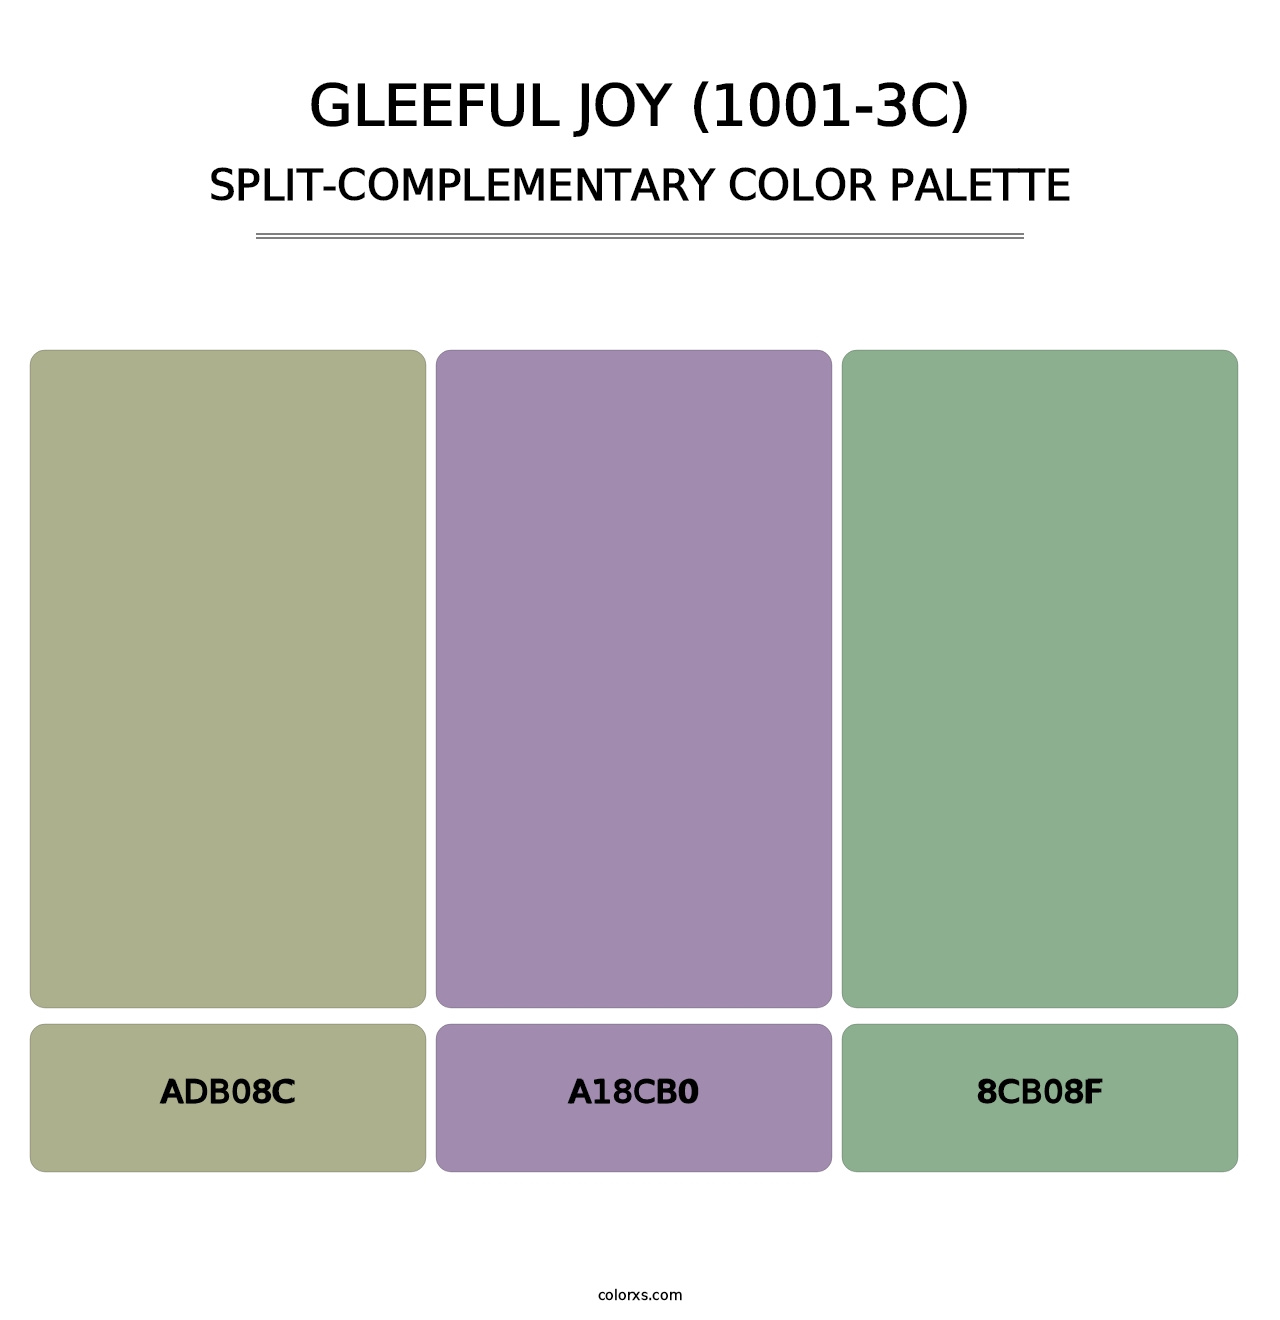 Gleeful Joy (1001-3C) - Split-Complementary Color Palette